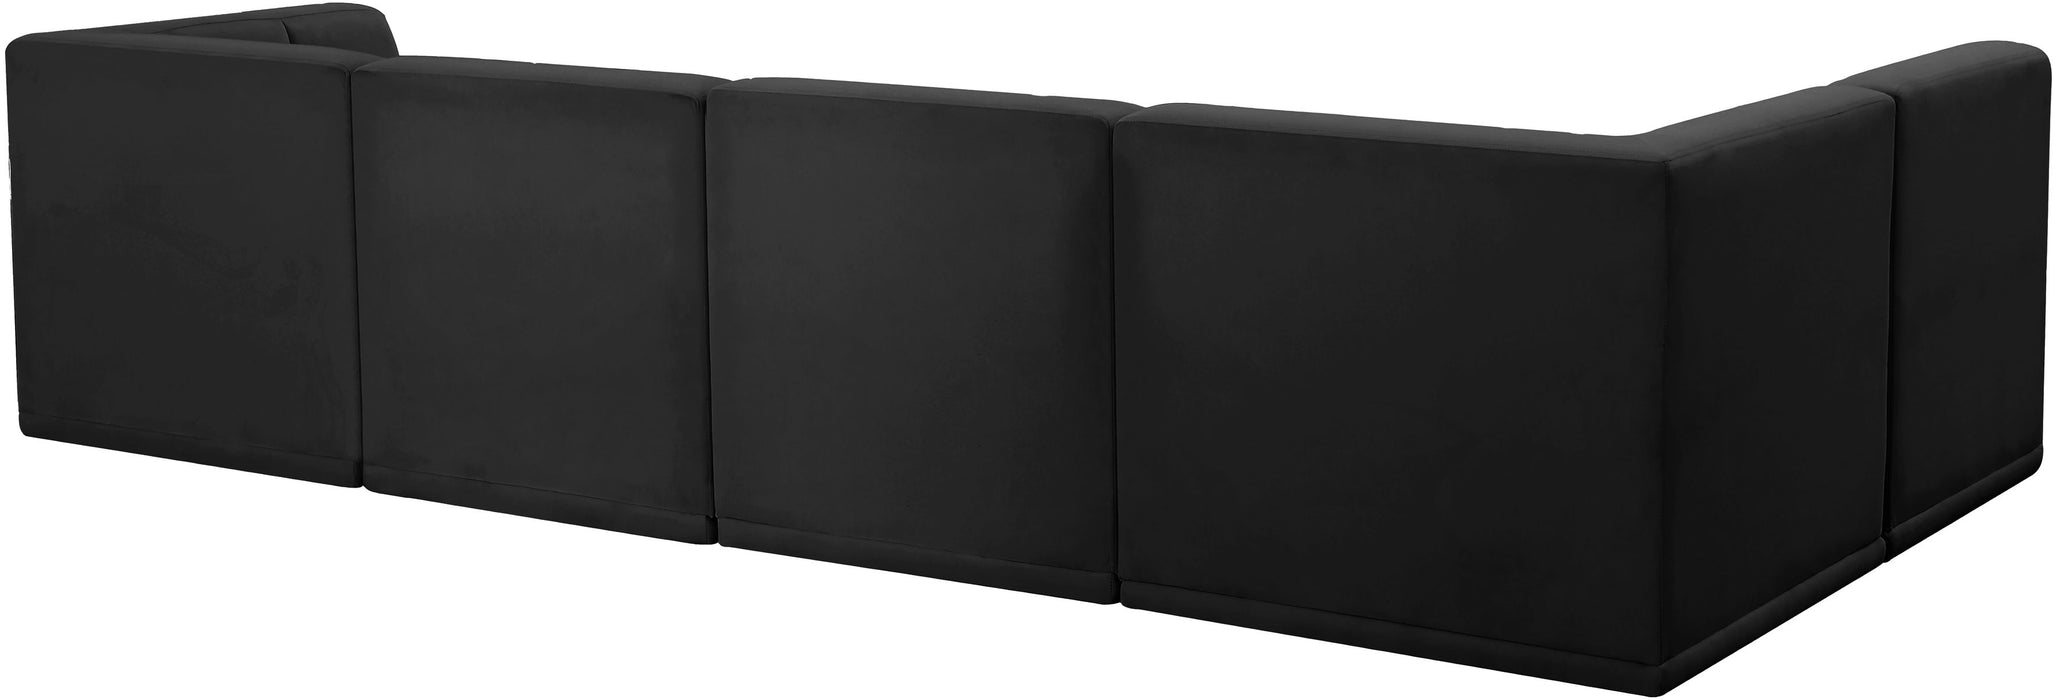 Relax - Modular Sectional 5 Piece - Black - Fabric